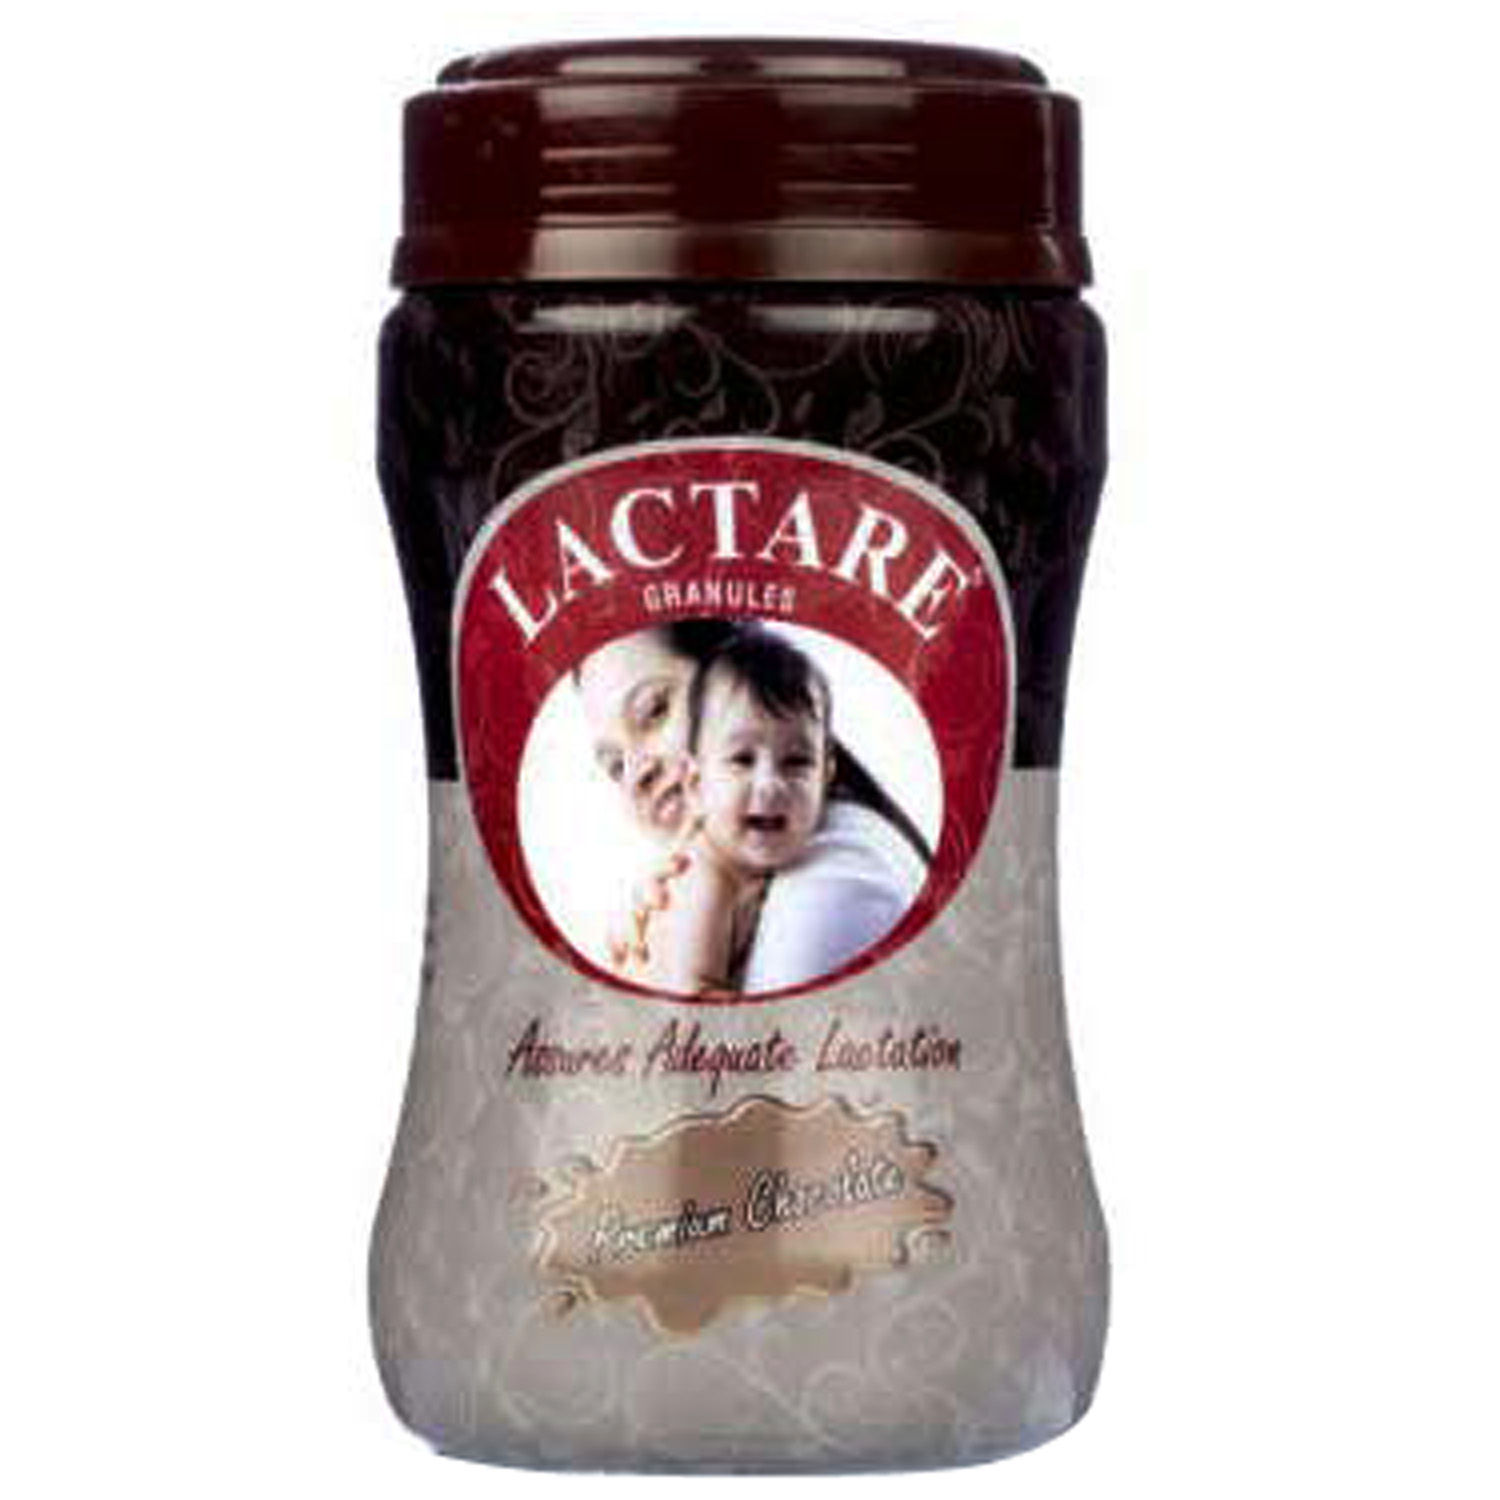 Buy Lactare Premium Chocolate Flavoured Granules, 200 gm Jar Online